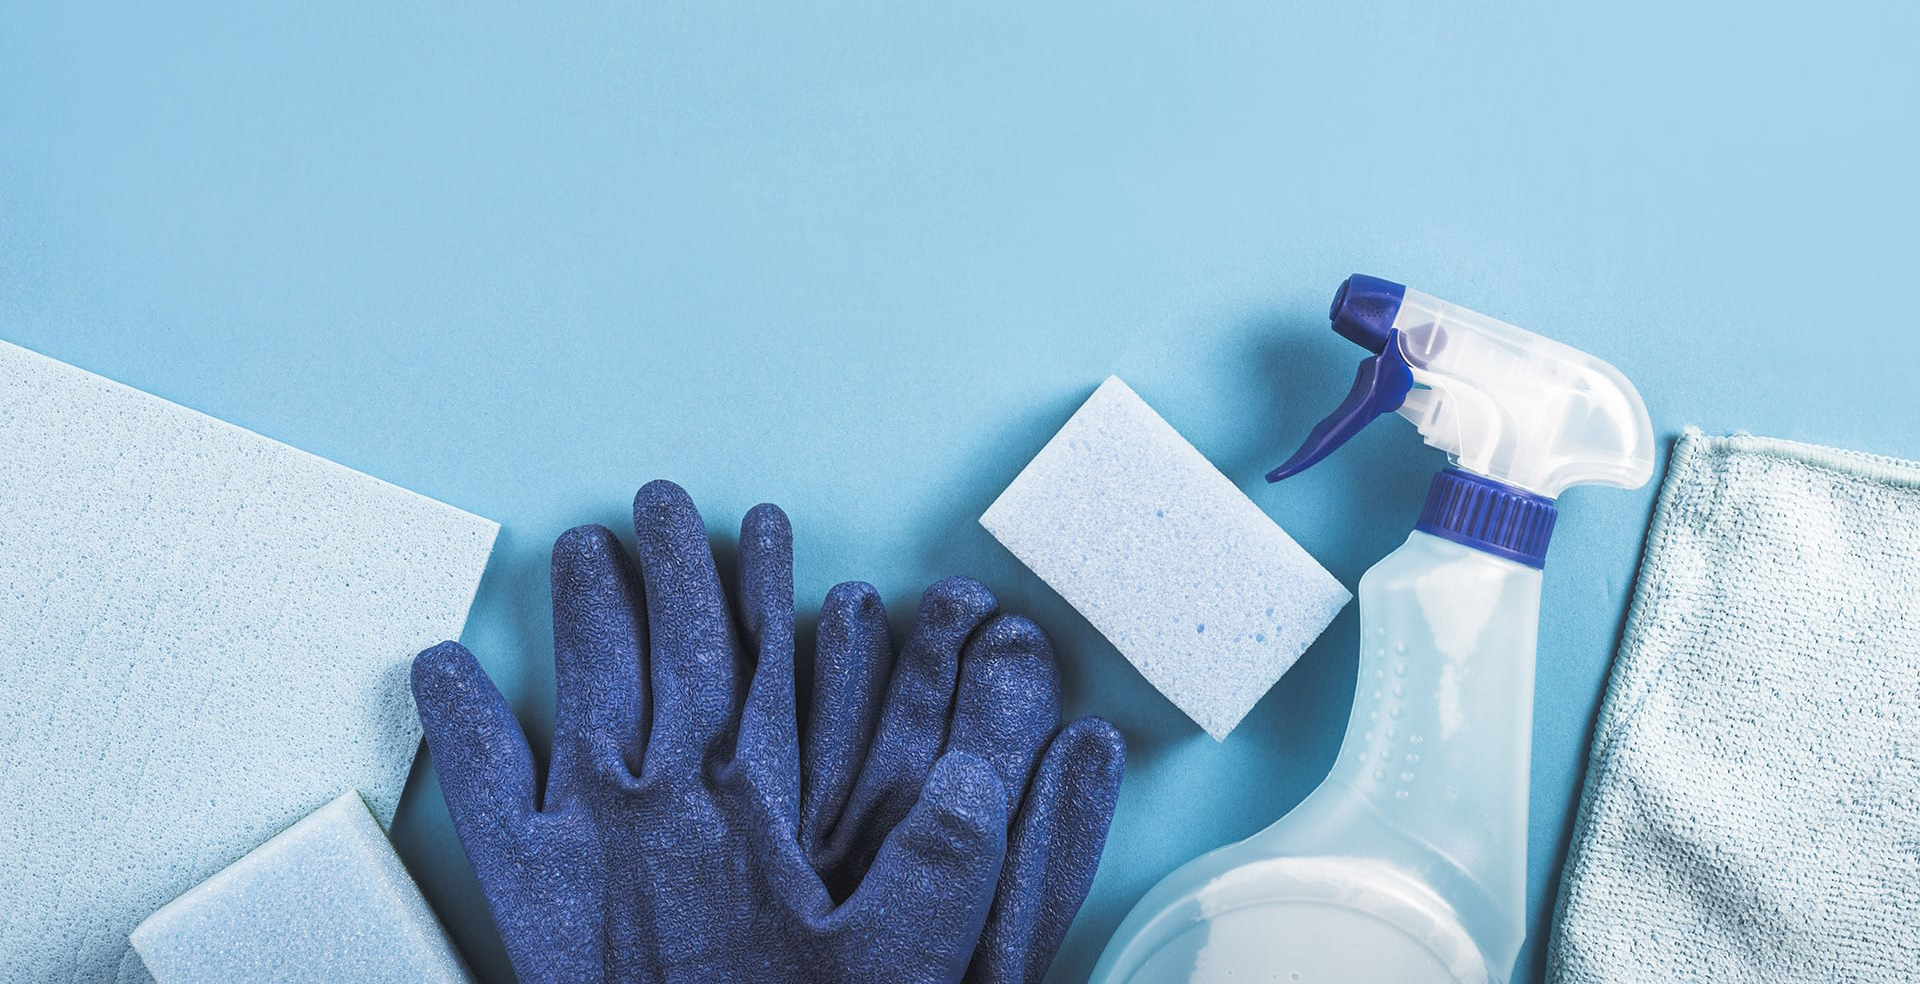 high-angle-view-spray-bottle-gloves-sponge-blue-background